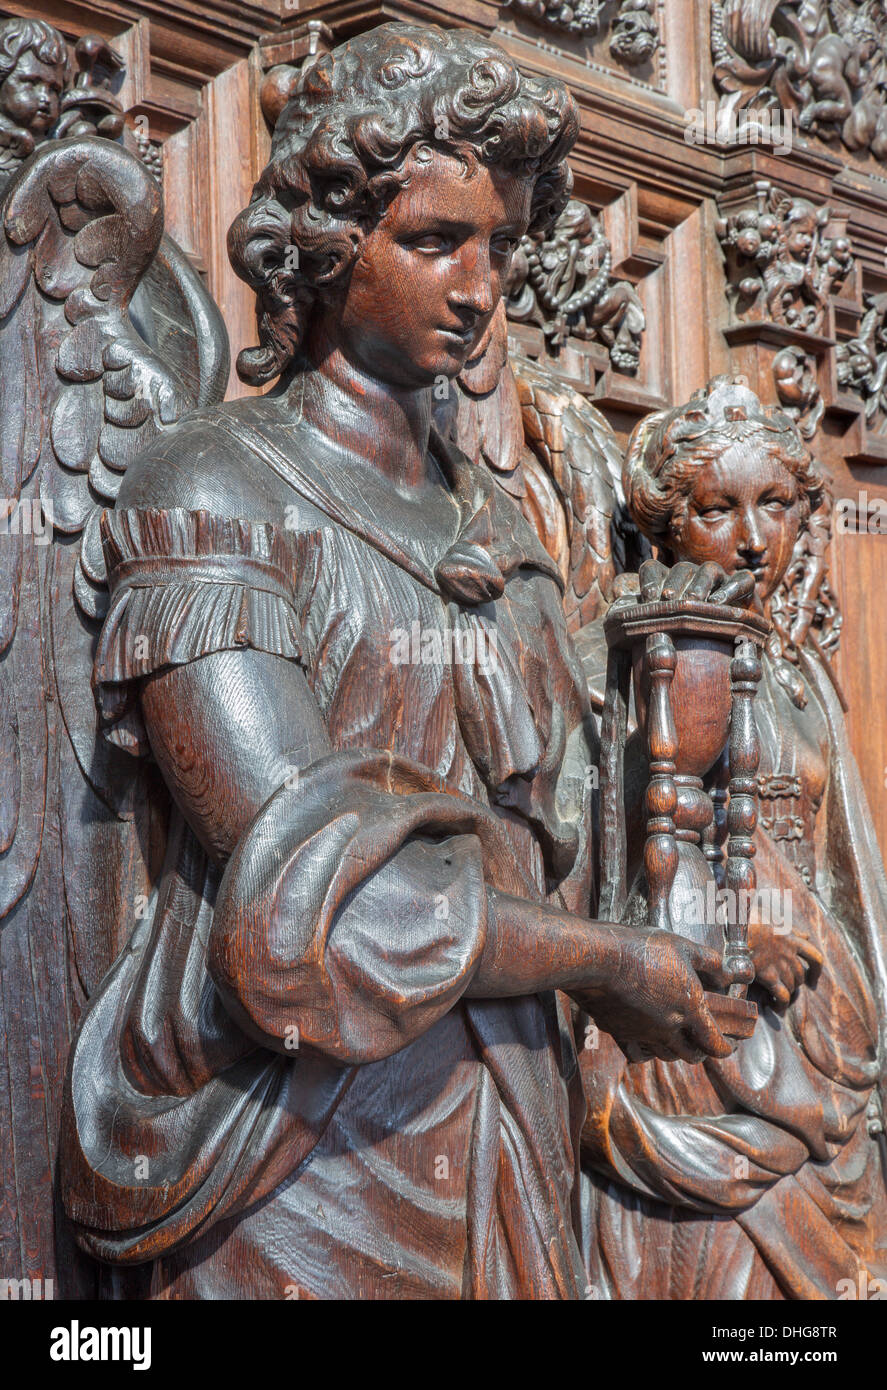 Antwerpen, Belgien - 5. SEPTEMBER: Statue des Engels als Symbol der Hoffnung - Kardinal virtuos in St. Pauls-Kirche (Paulskerk) Stockfoto